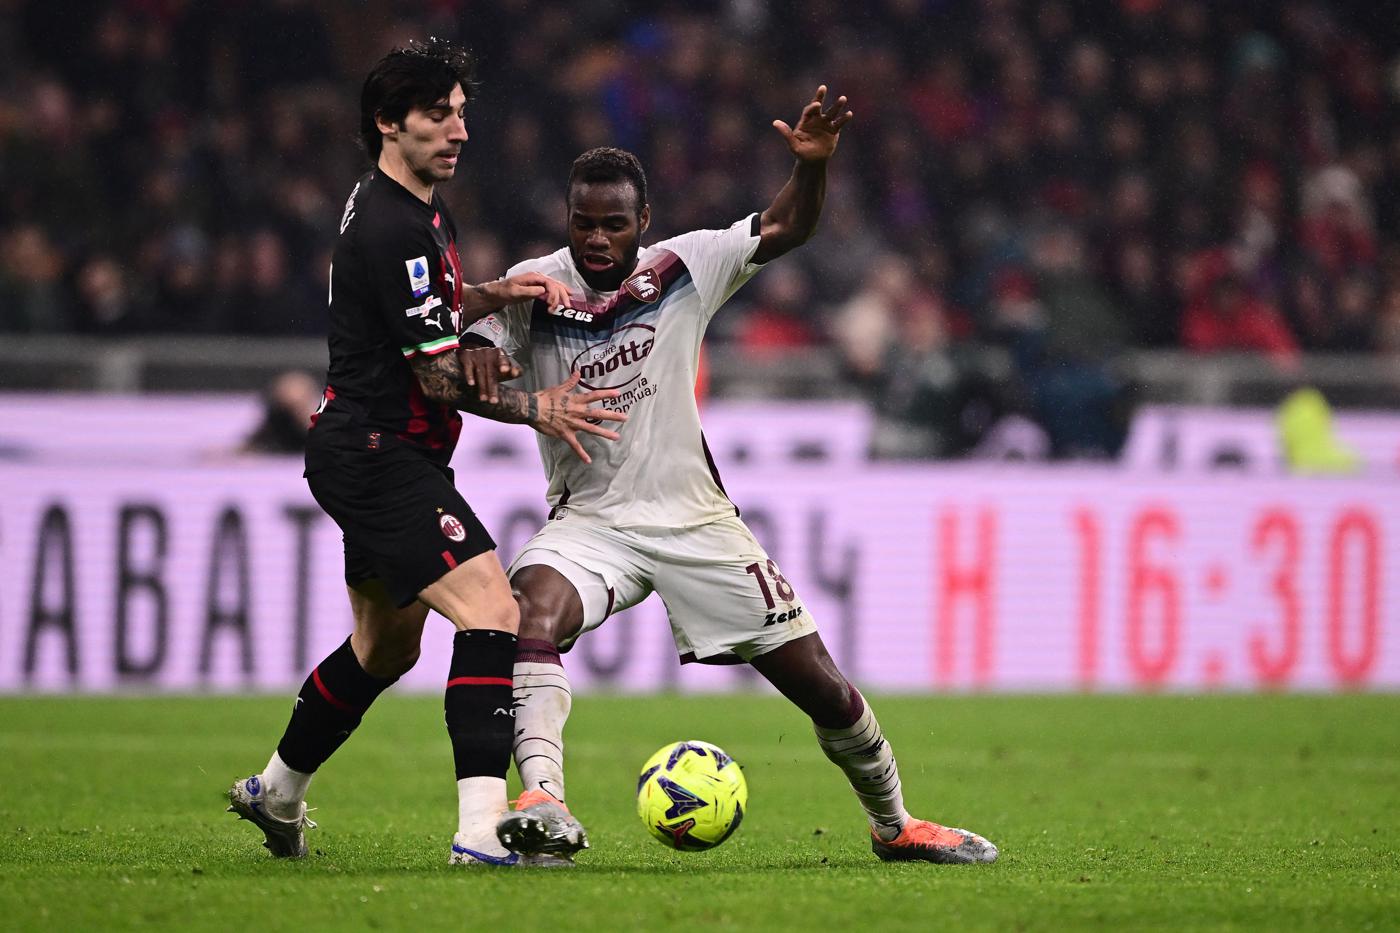 AC Mailand gegen Salernitana: Live-Stream, wo zu sehen (13. März)